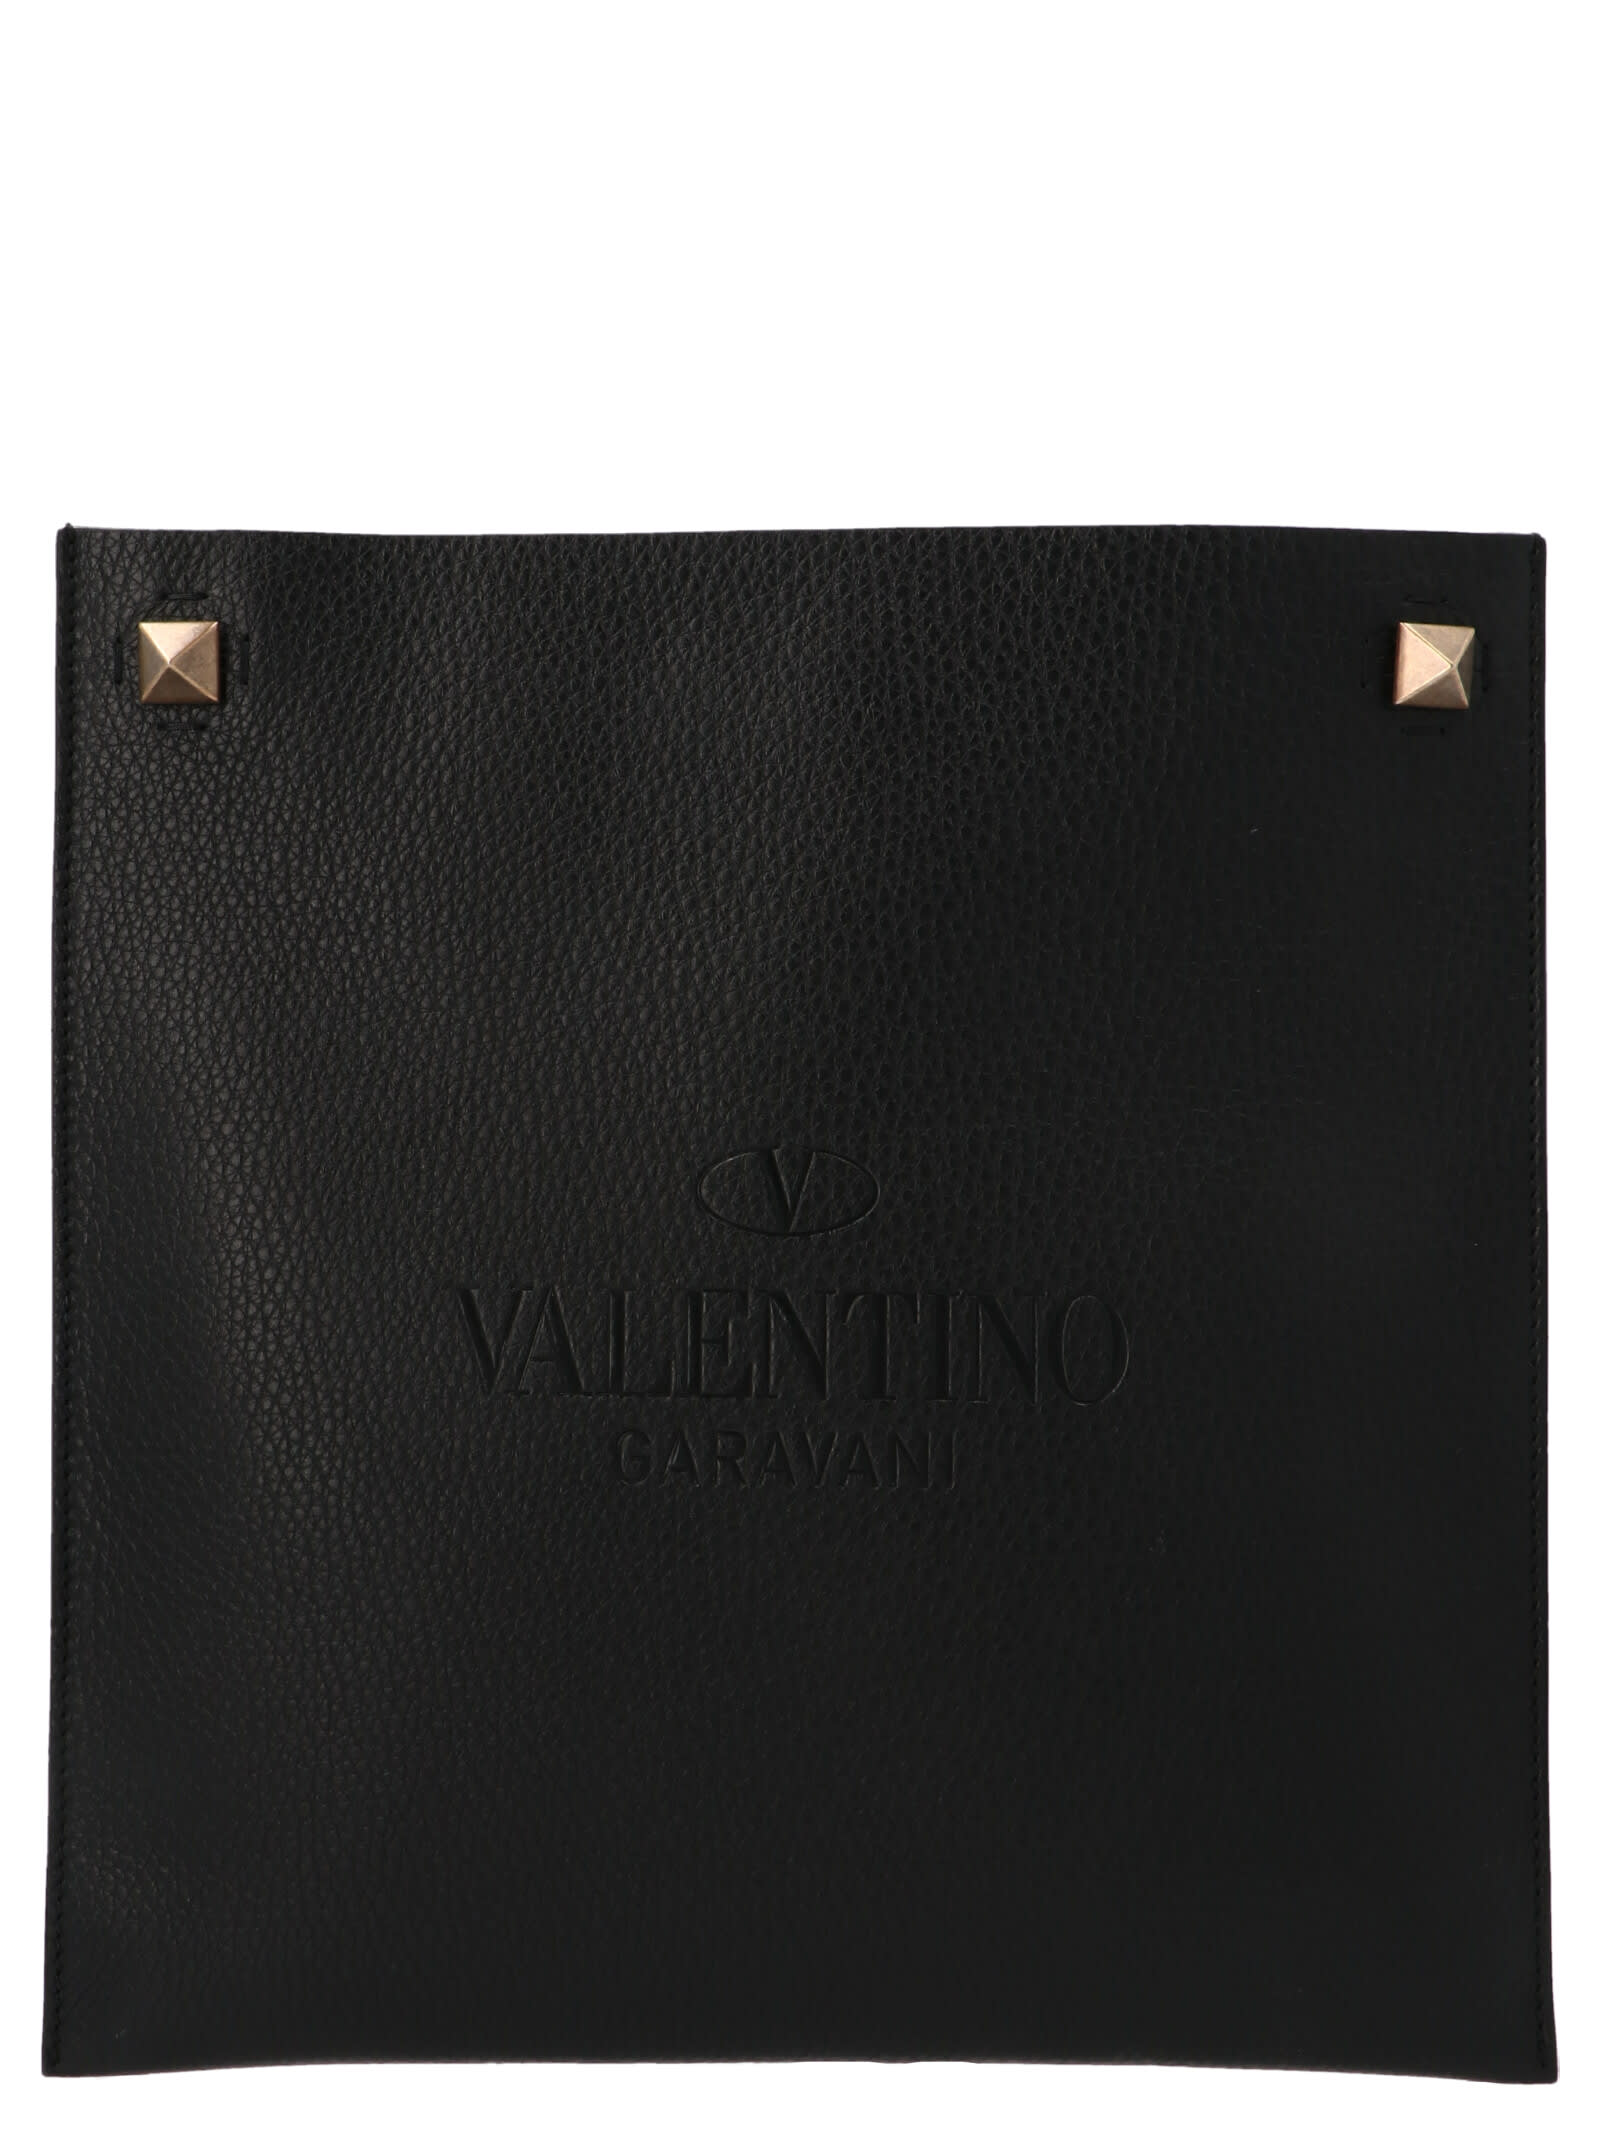 Valentino Garavani identity Bag